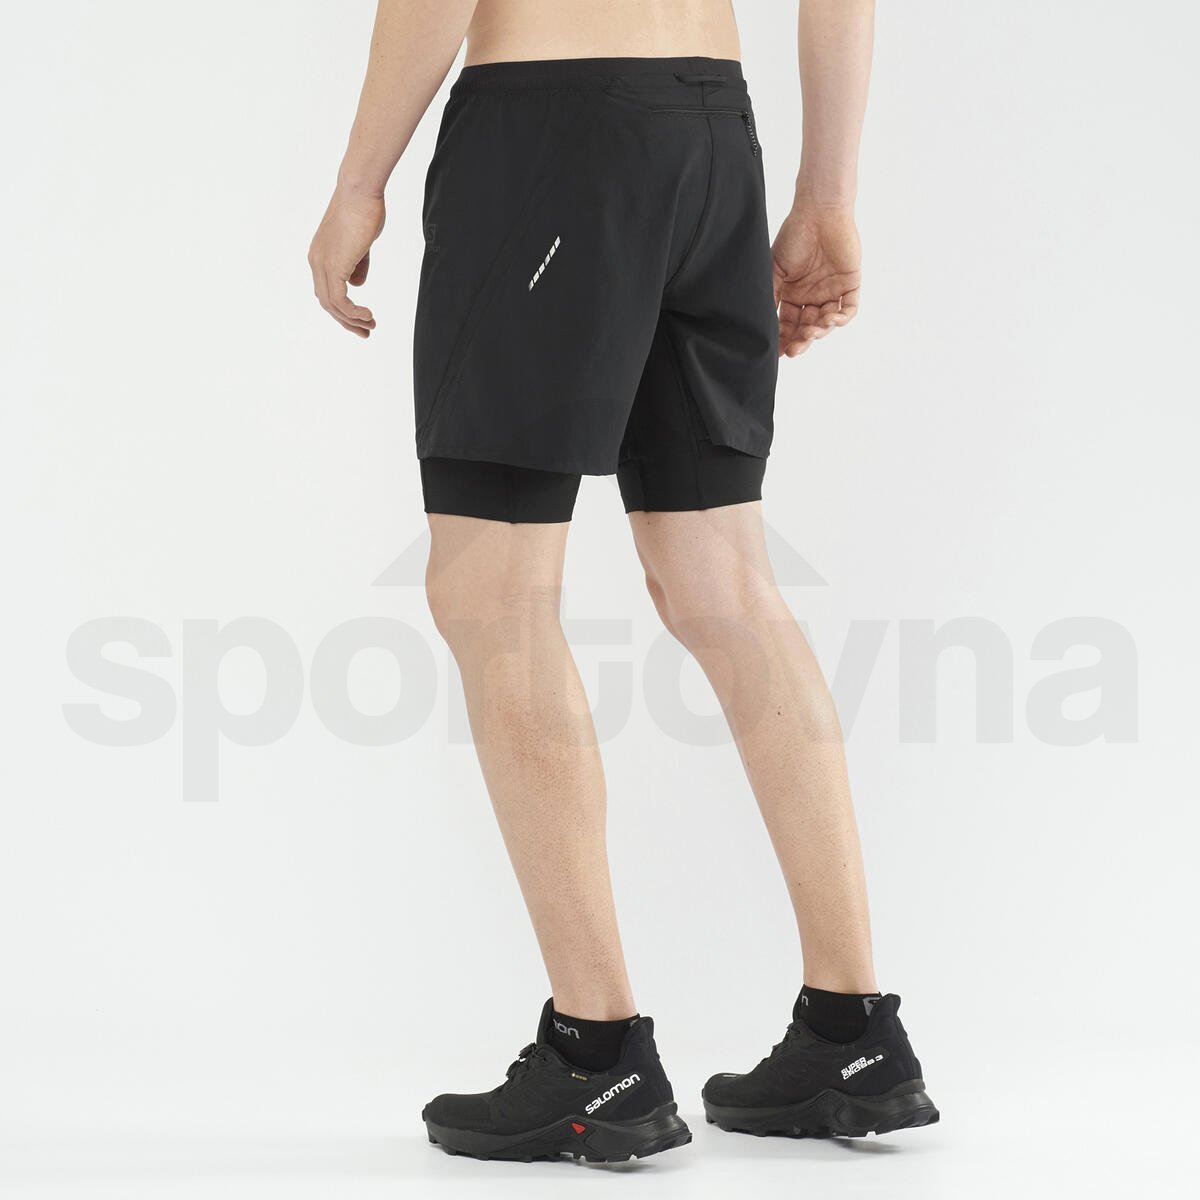 Kraťasy Salomon Cross Twinskin Shorts M - černá